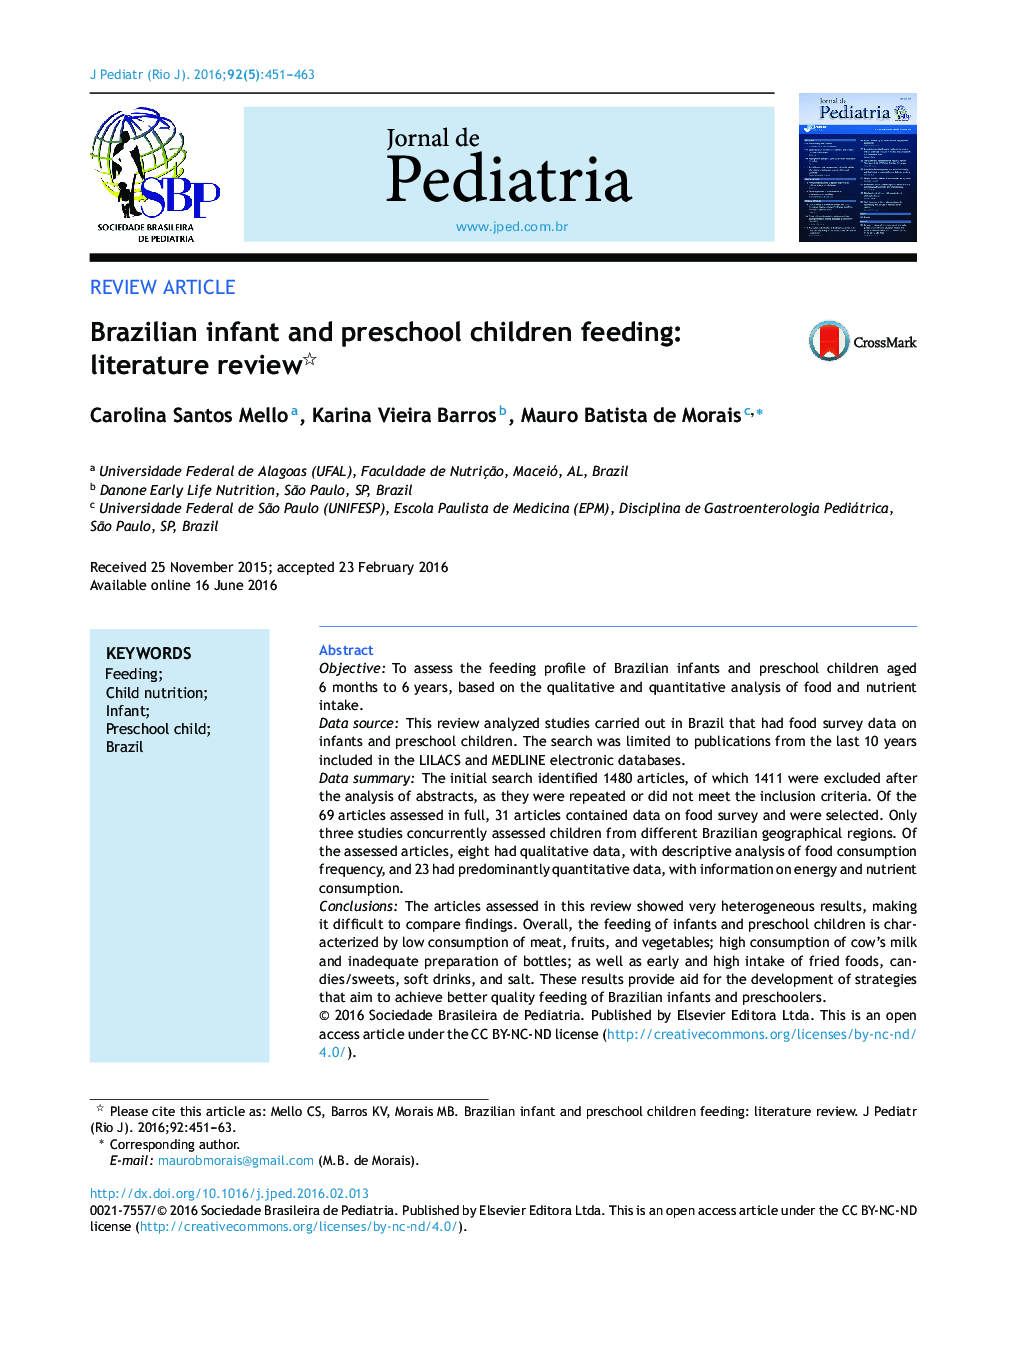 Brazilian infant and preschool children feeding: literature review 